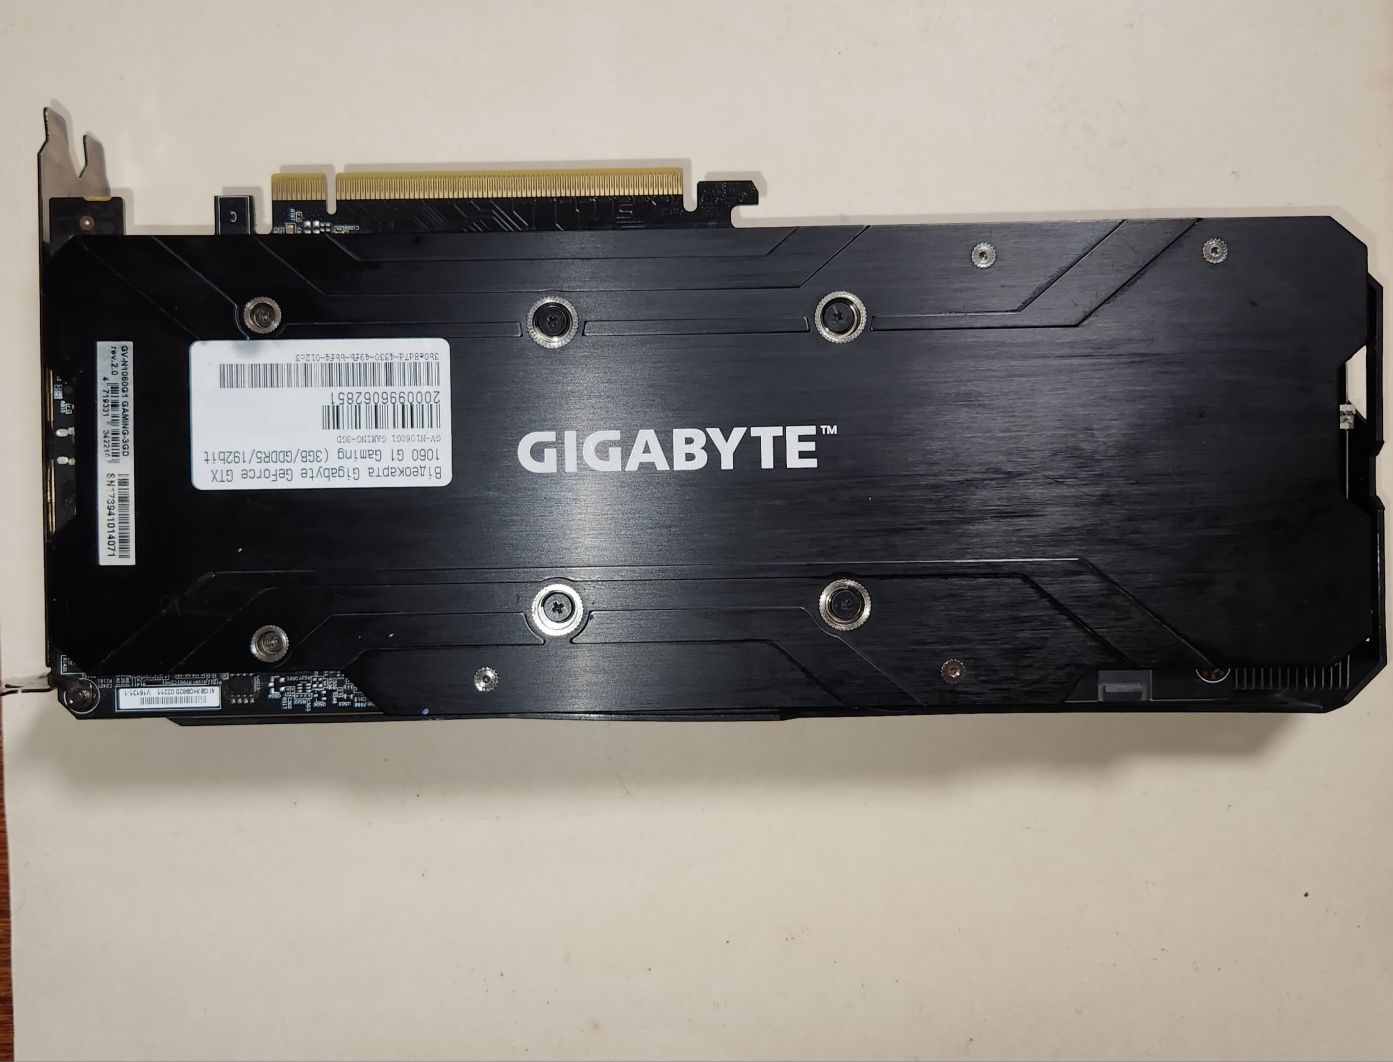 GTX 1060 3GB Gigabyte g1